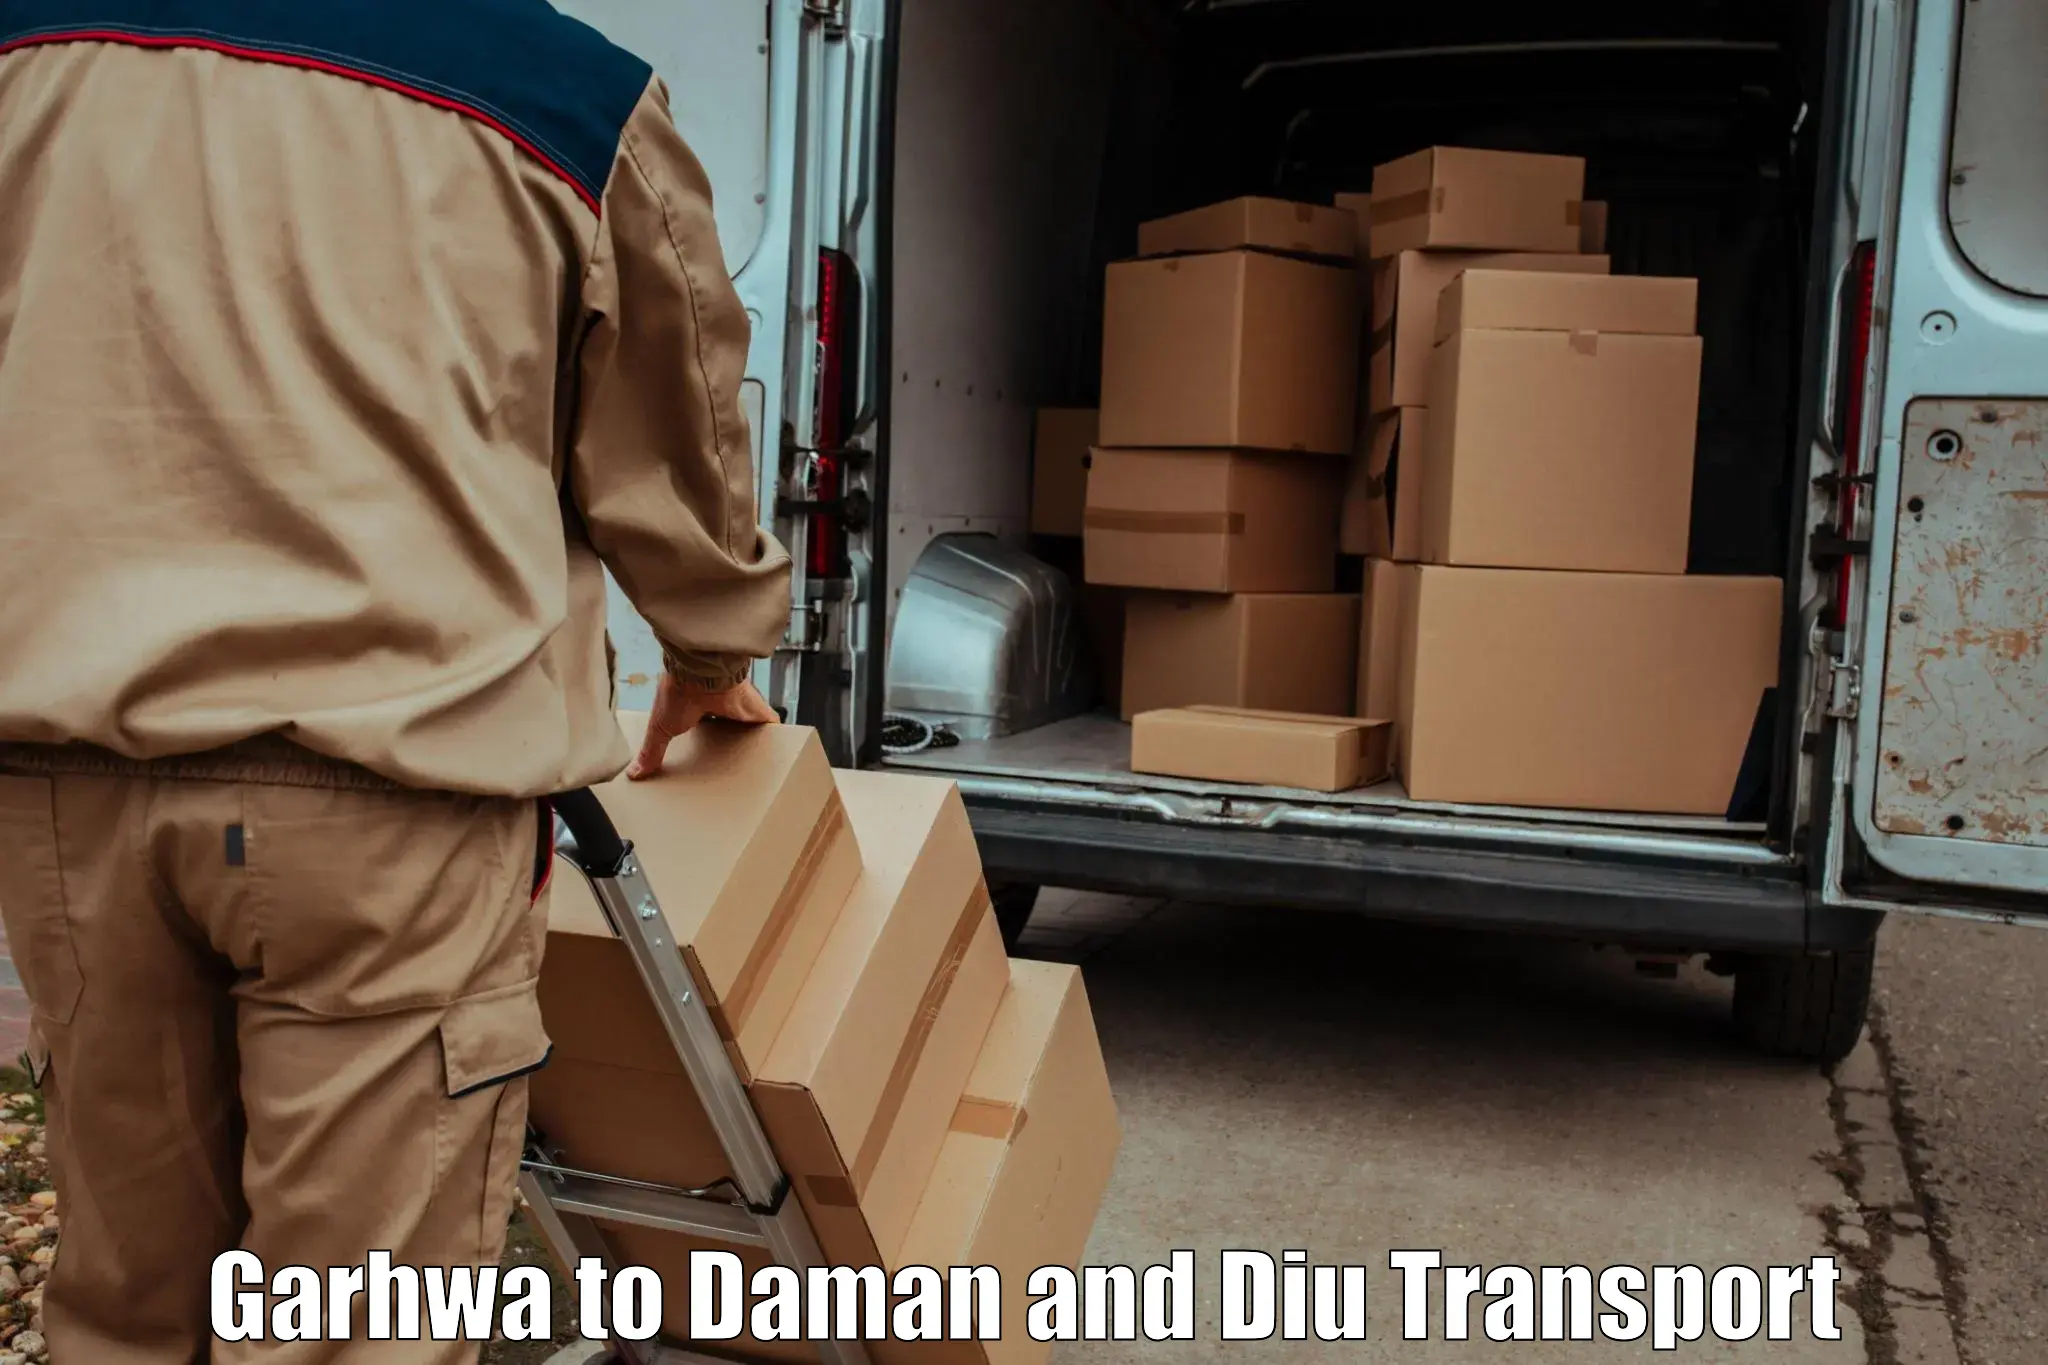 Bike shipping service Garhwa to Daman and Diu